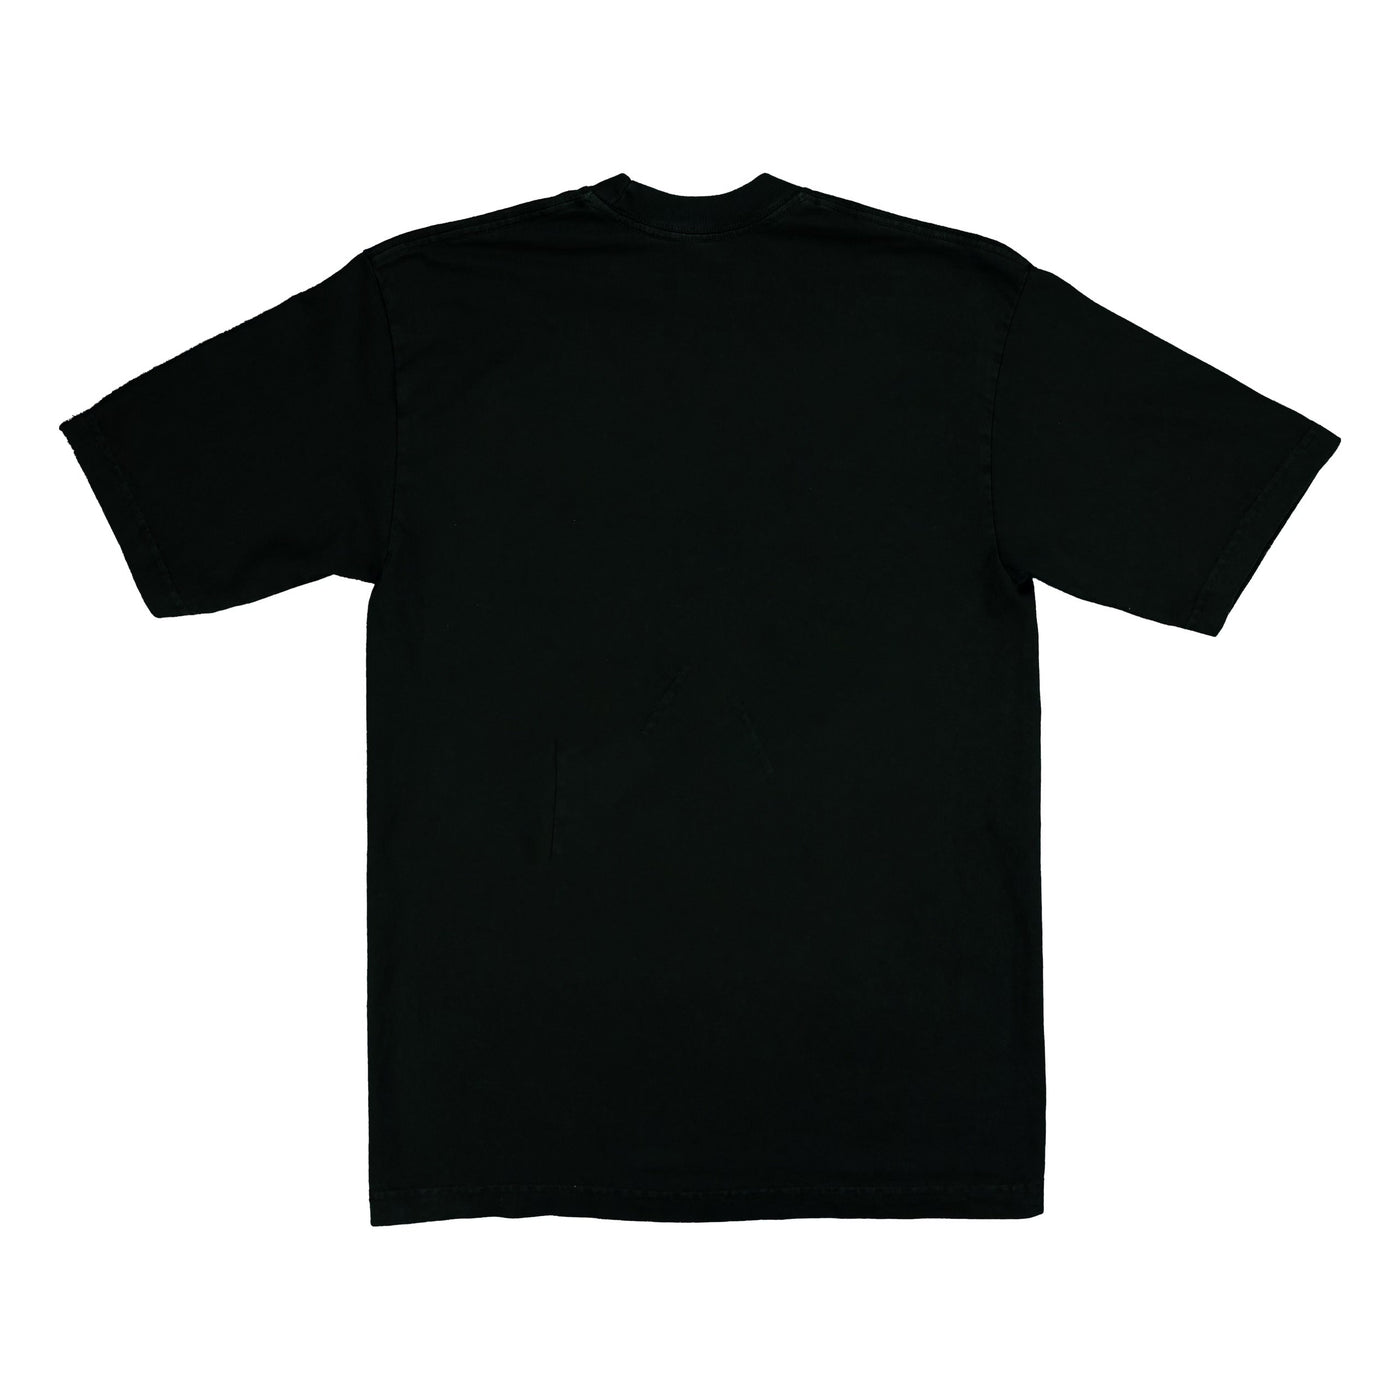 Limited Edition 91 Crenshaw T-Shirt - Black/White - Back